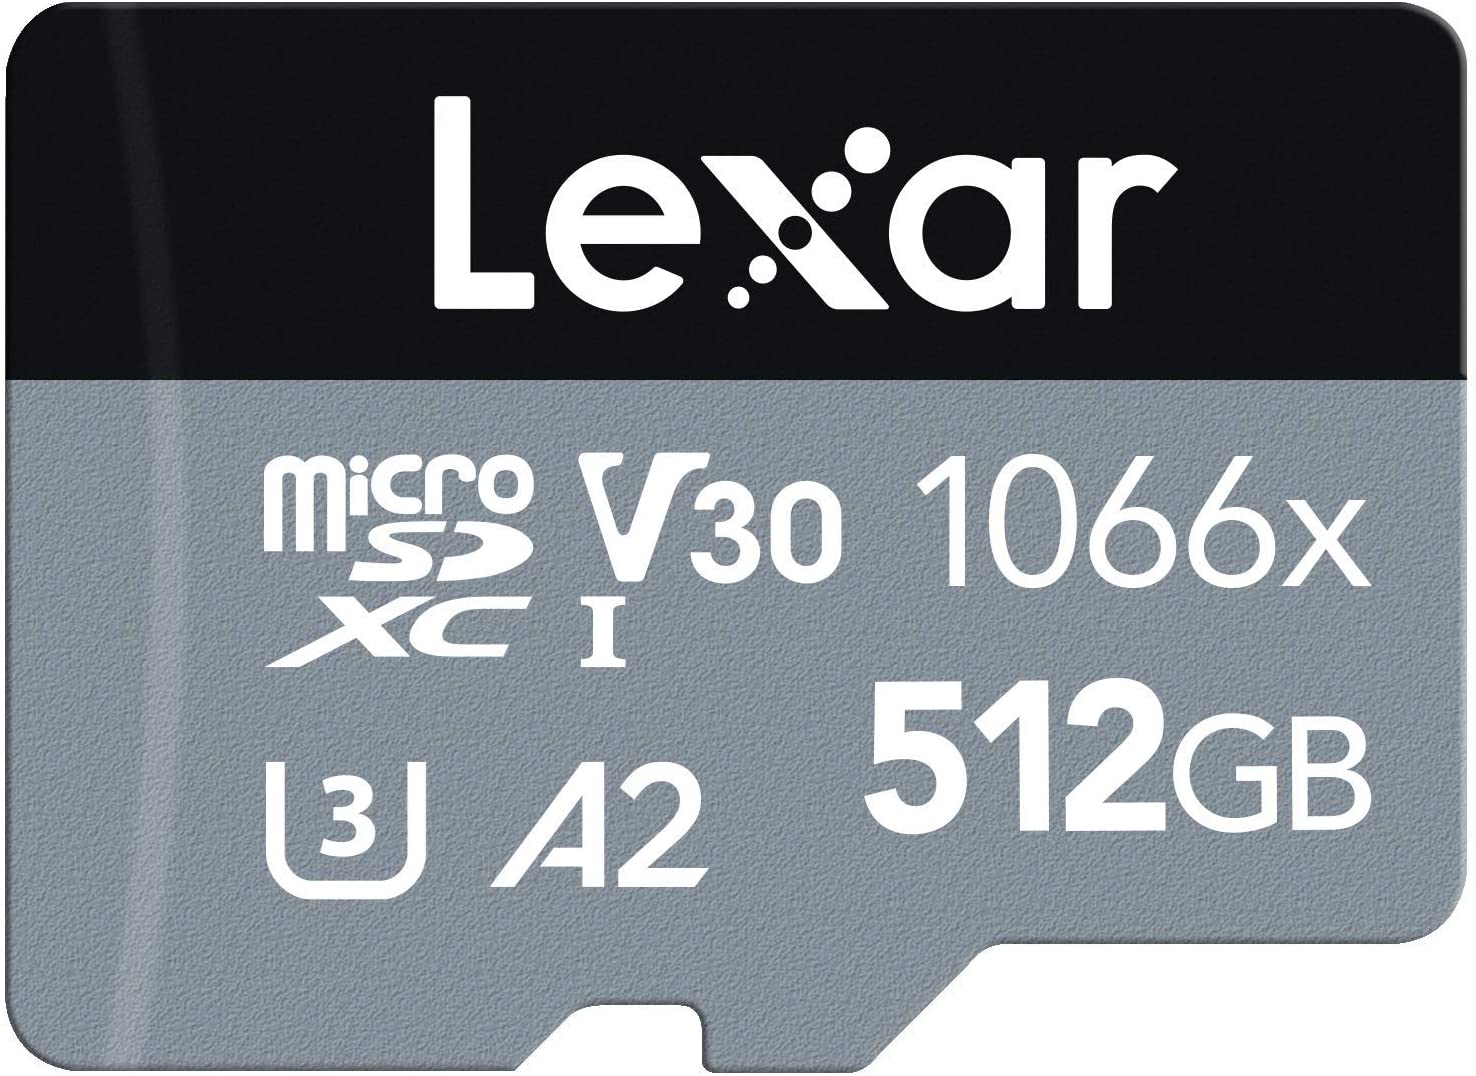 Lexar 512GB MicroSD Card Price in Pakistan - Hashmi Photos